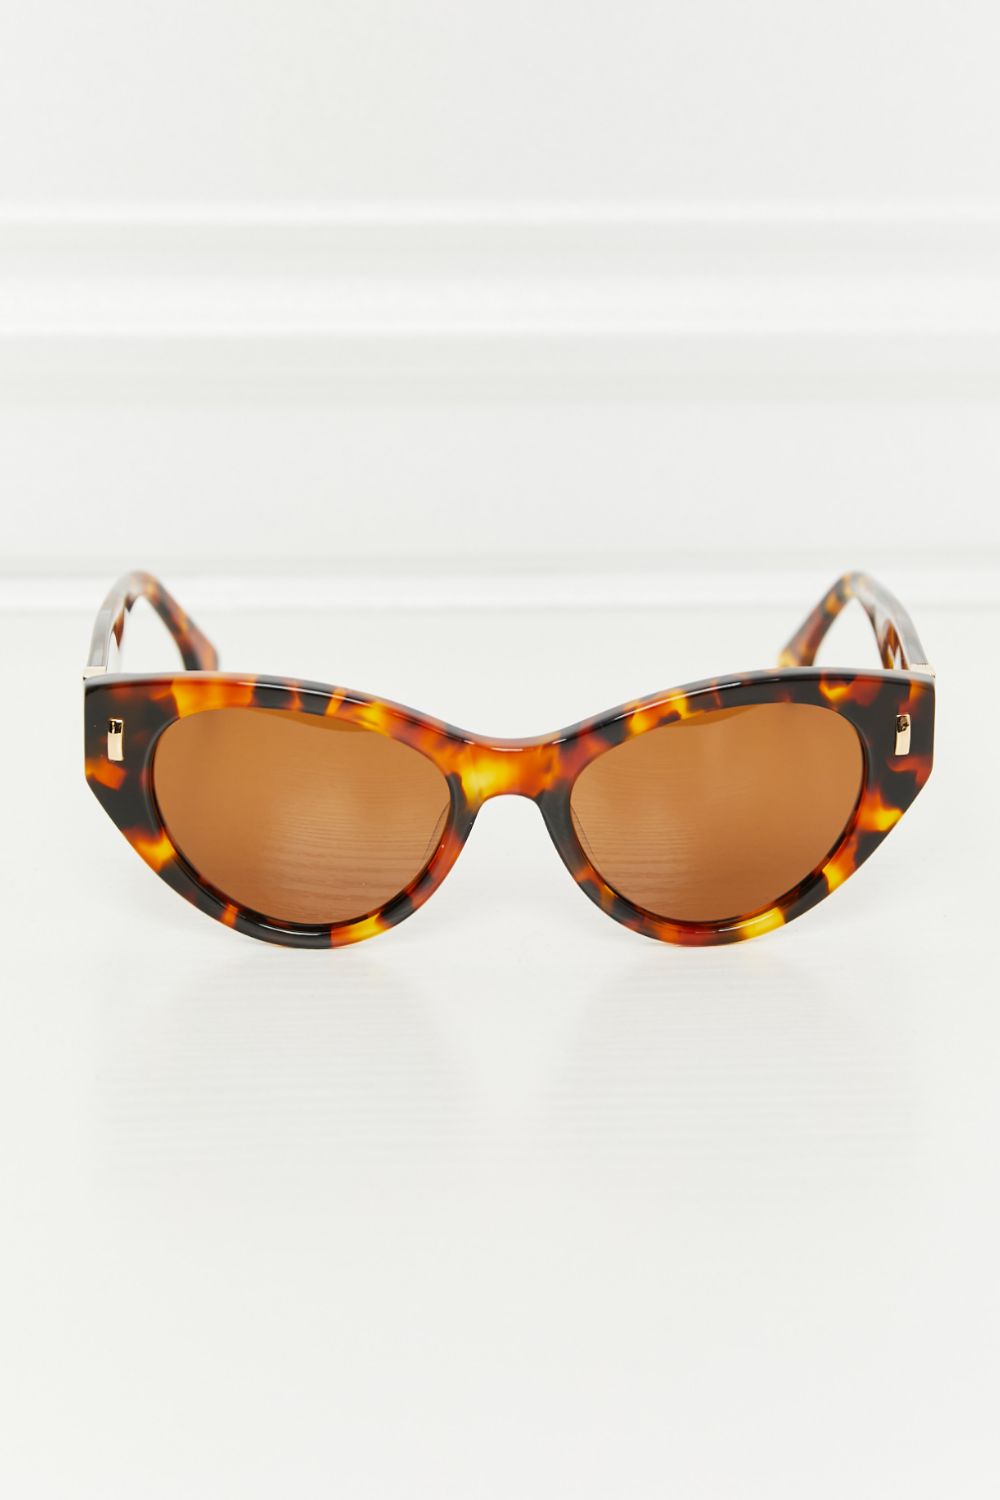 Tortoiseshell Acetate Frame Sunglasses - Shop women apparel, Jewelry, bath & beauty products online - Arwen's Boutique